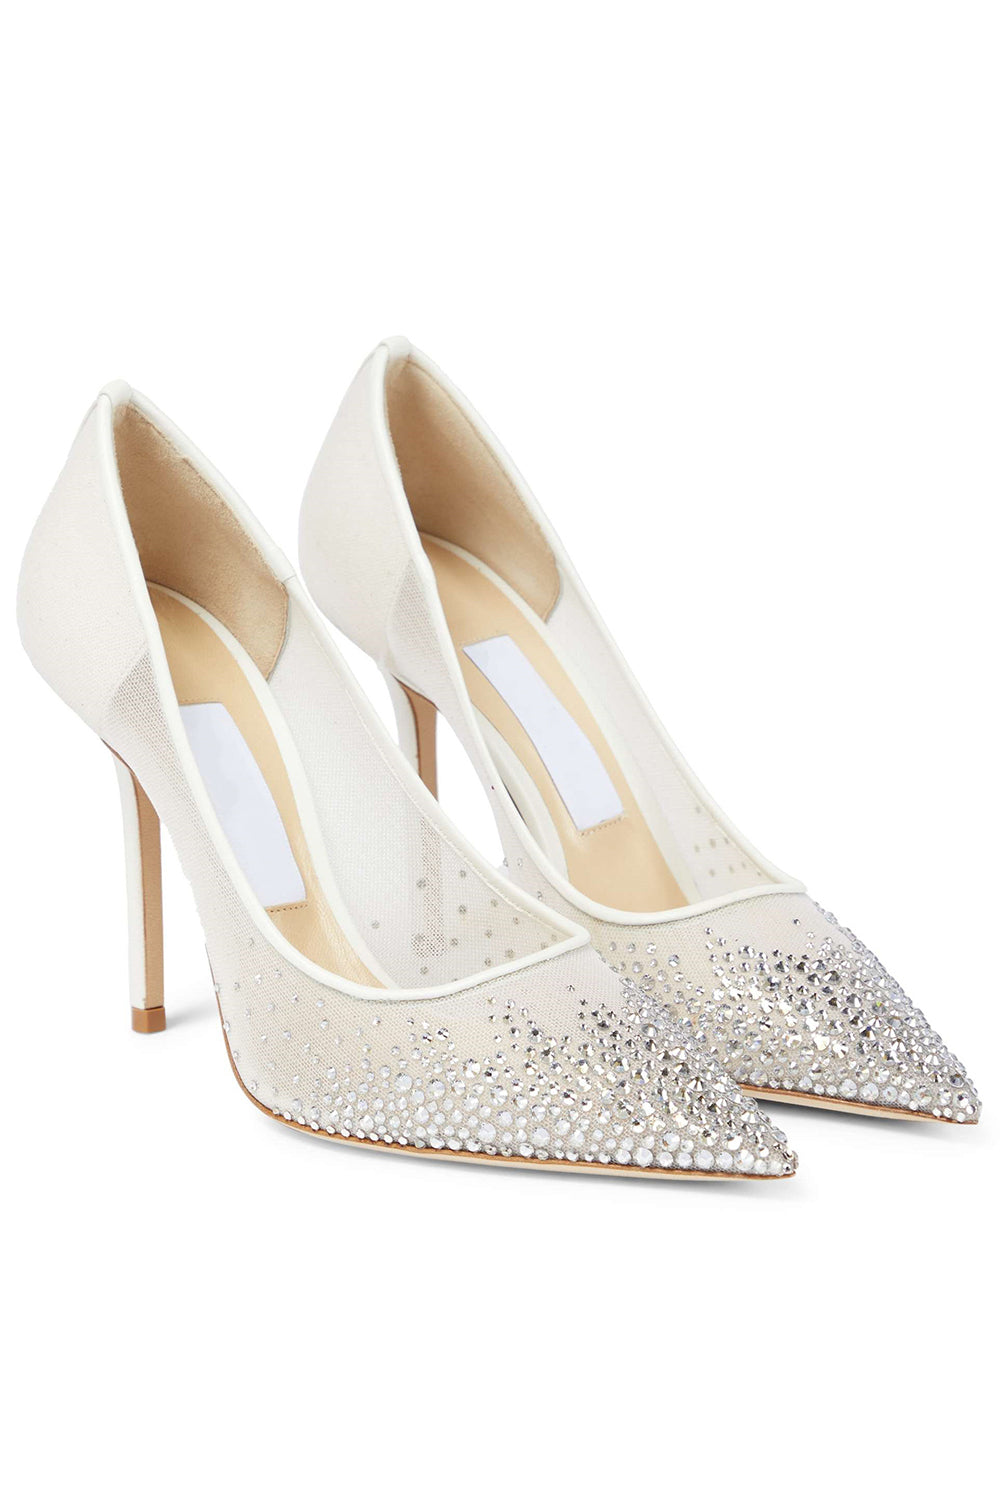 Gold pumps heels shoes for women glitter pumps high heels platform pumps  heels women shoes 14cm gold glitter pumps shoes | Wish